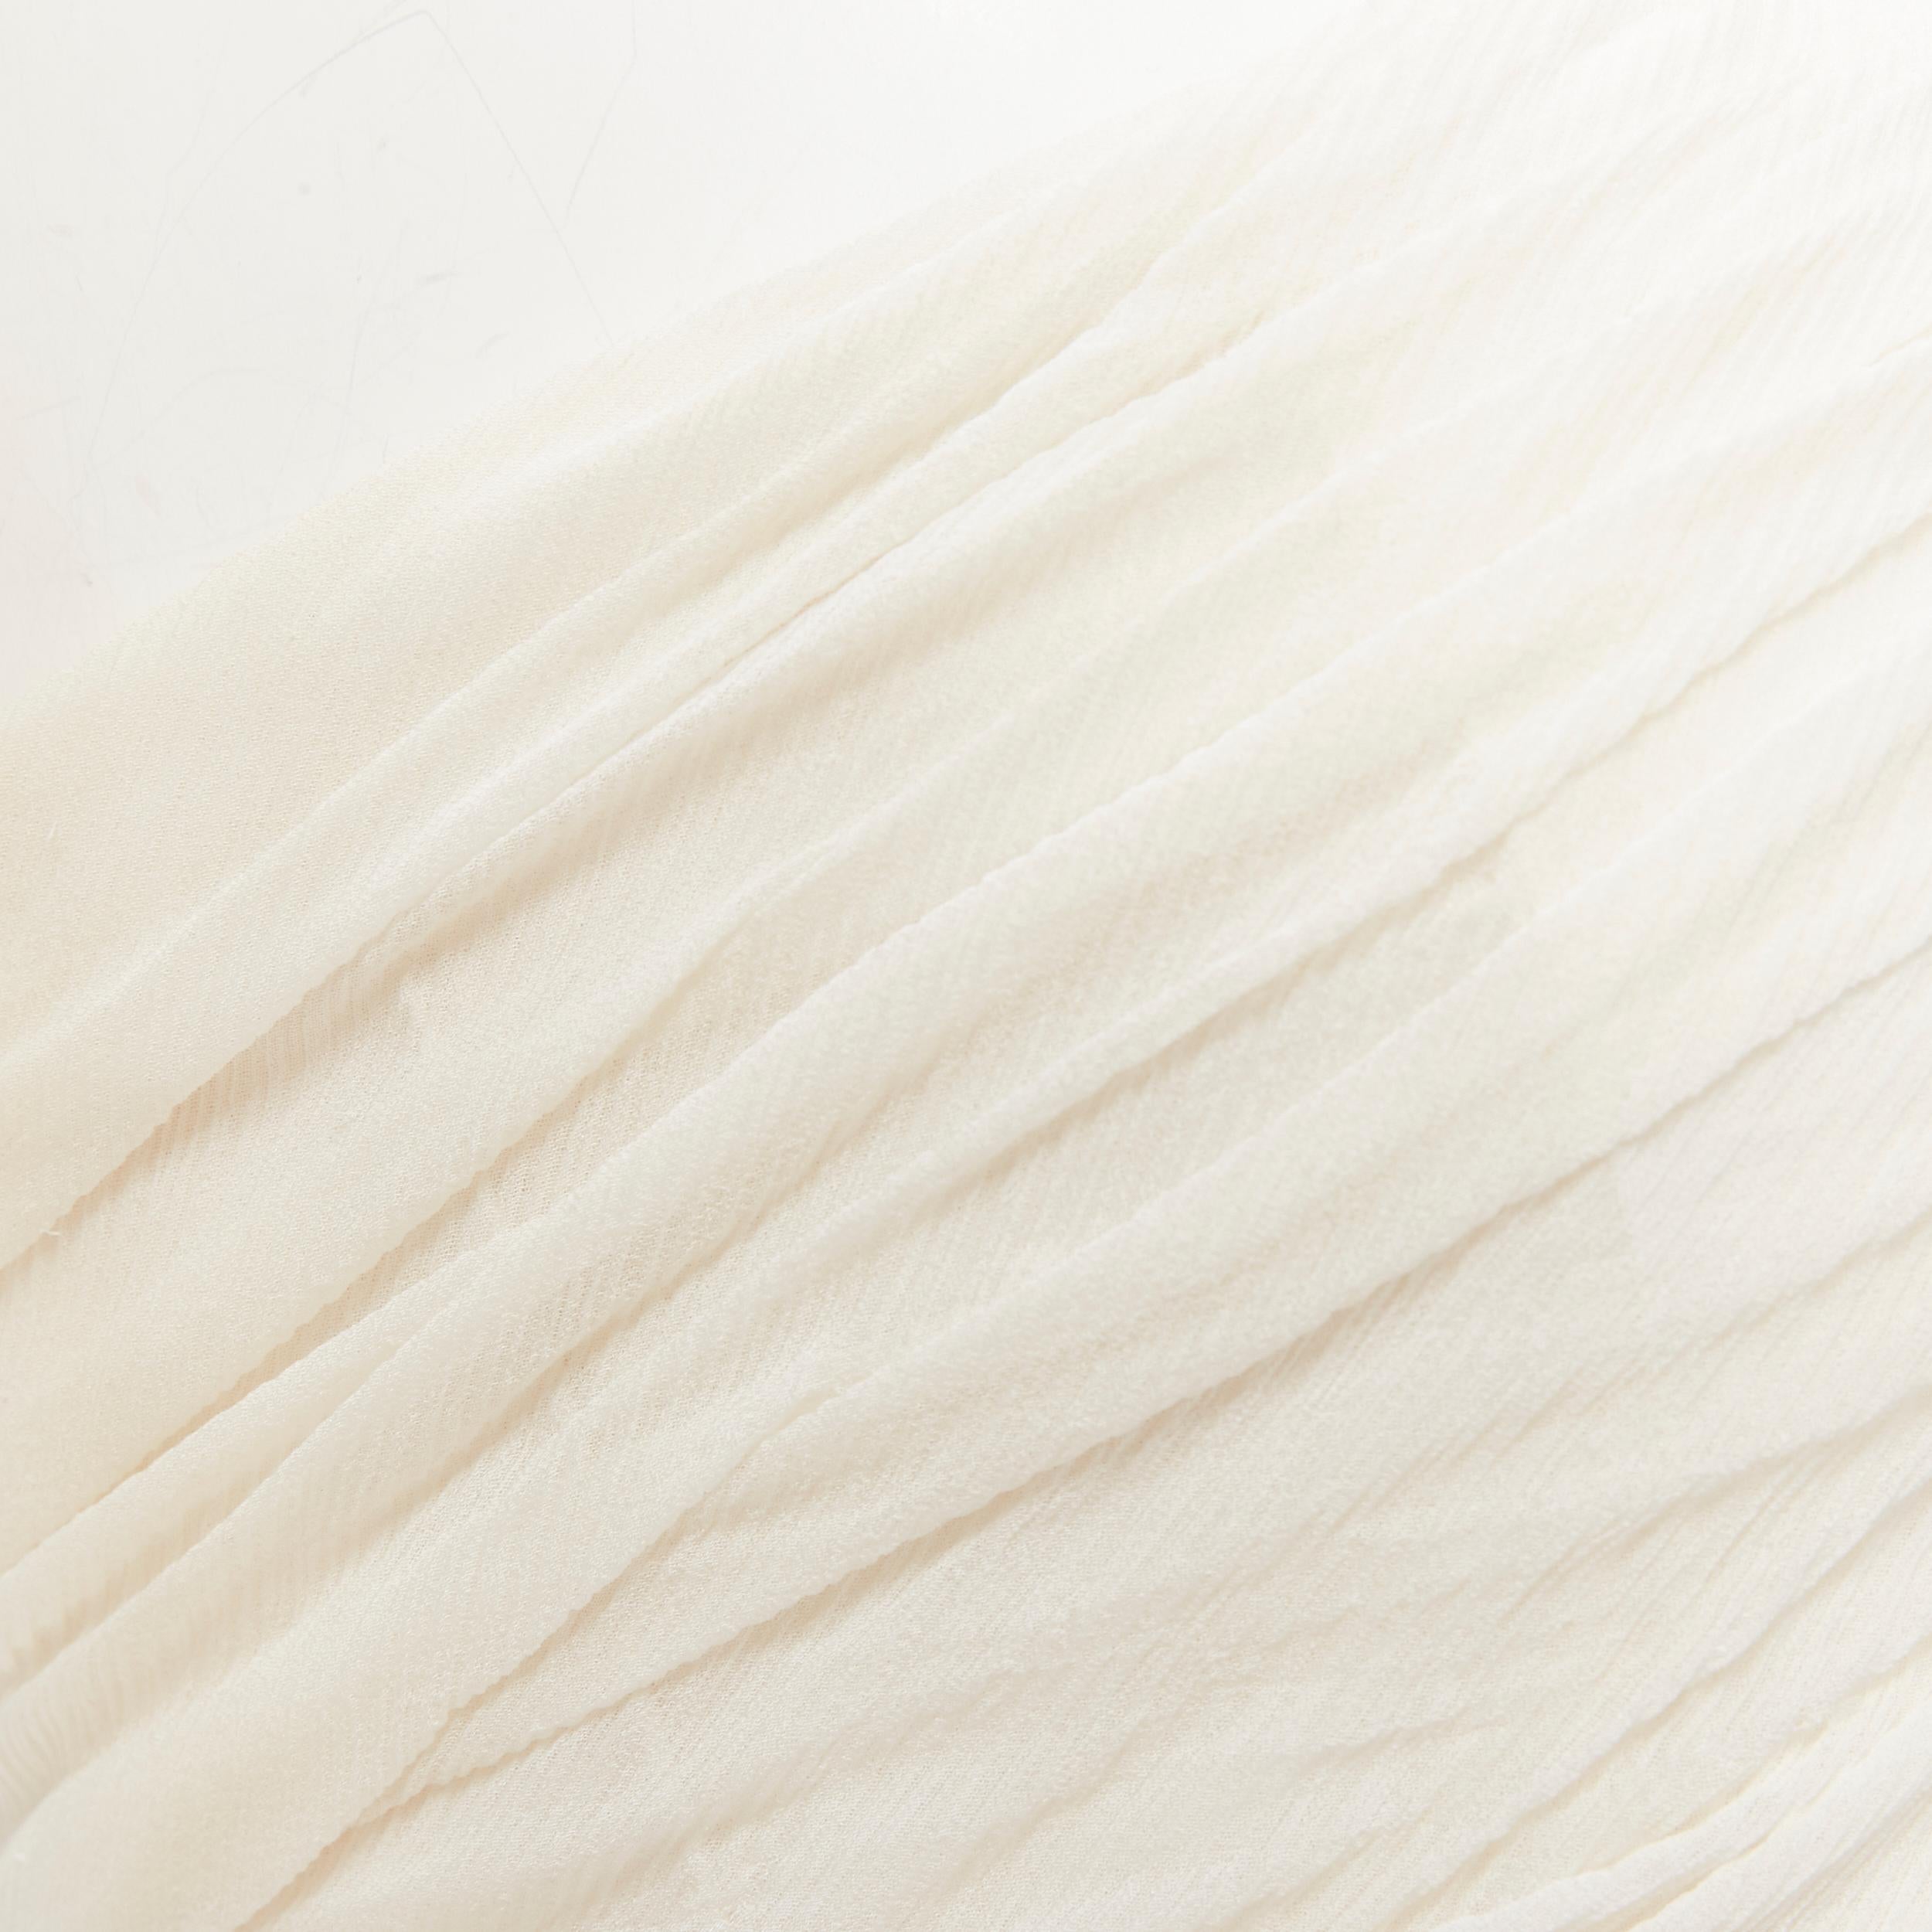 OSCAR DE LA RENTA ivory white boned corset strapless evening gown dress US0 XS 4